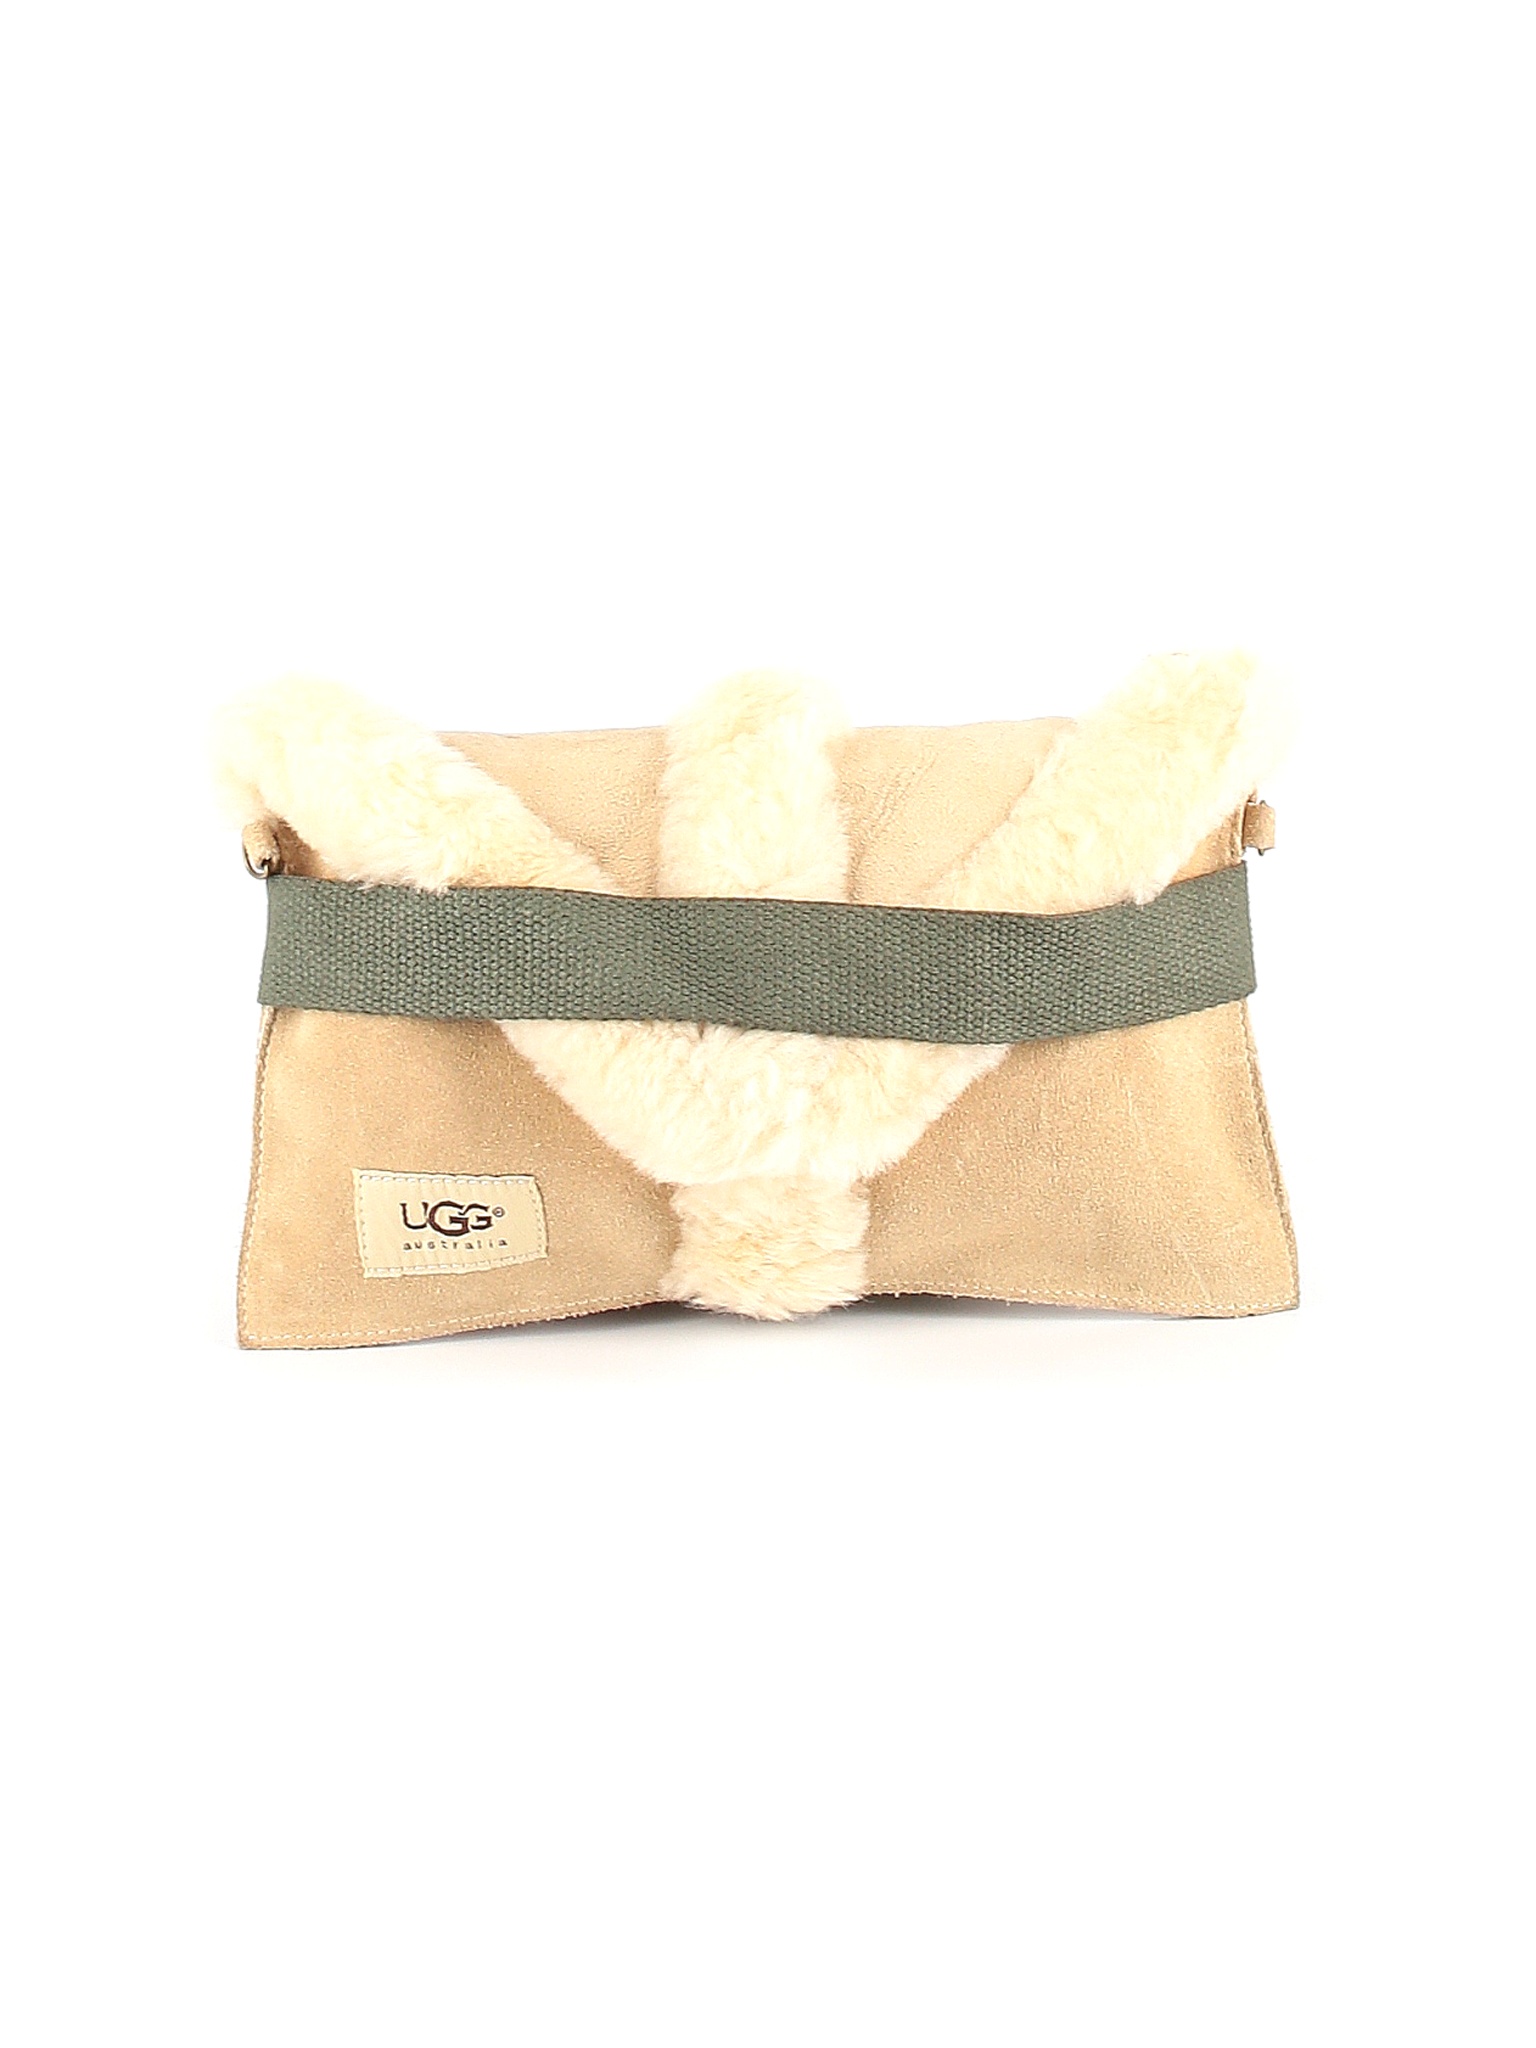 Ugg Australia Women Brown Leather Belt Bag One Size | eBay